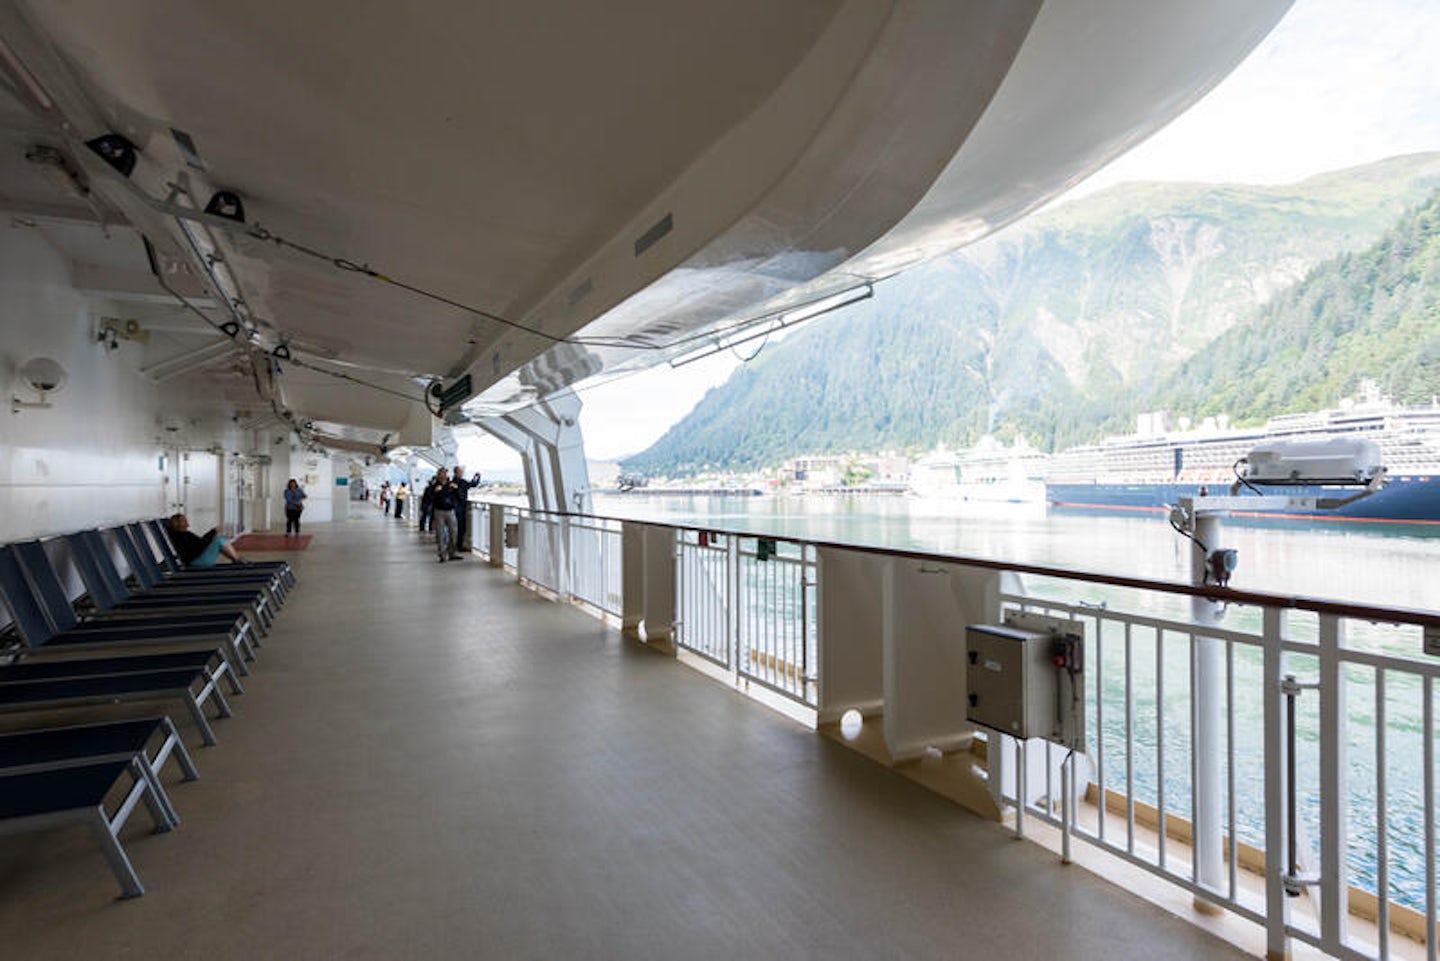 Exterior Decks on Norwegian Pearl